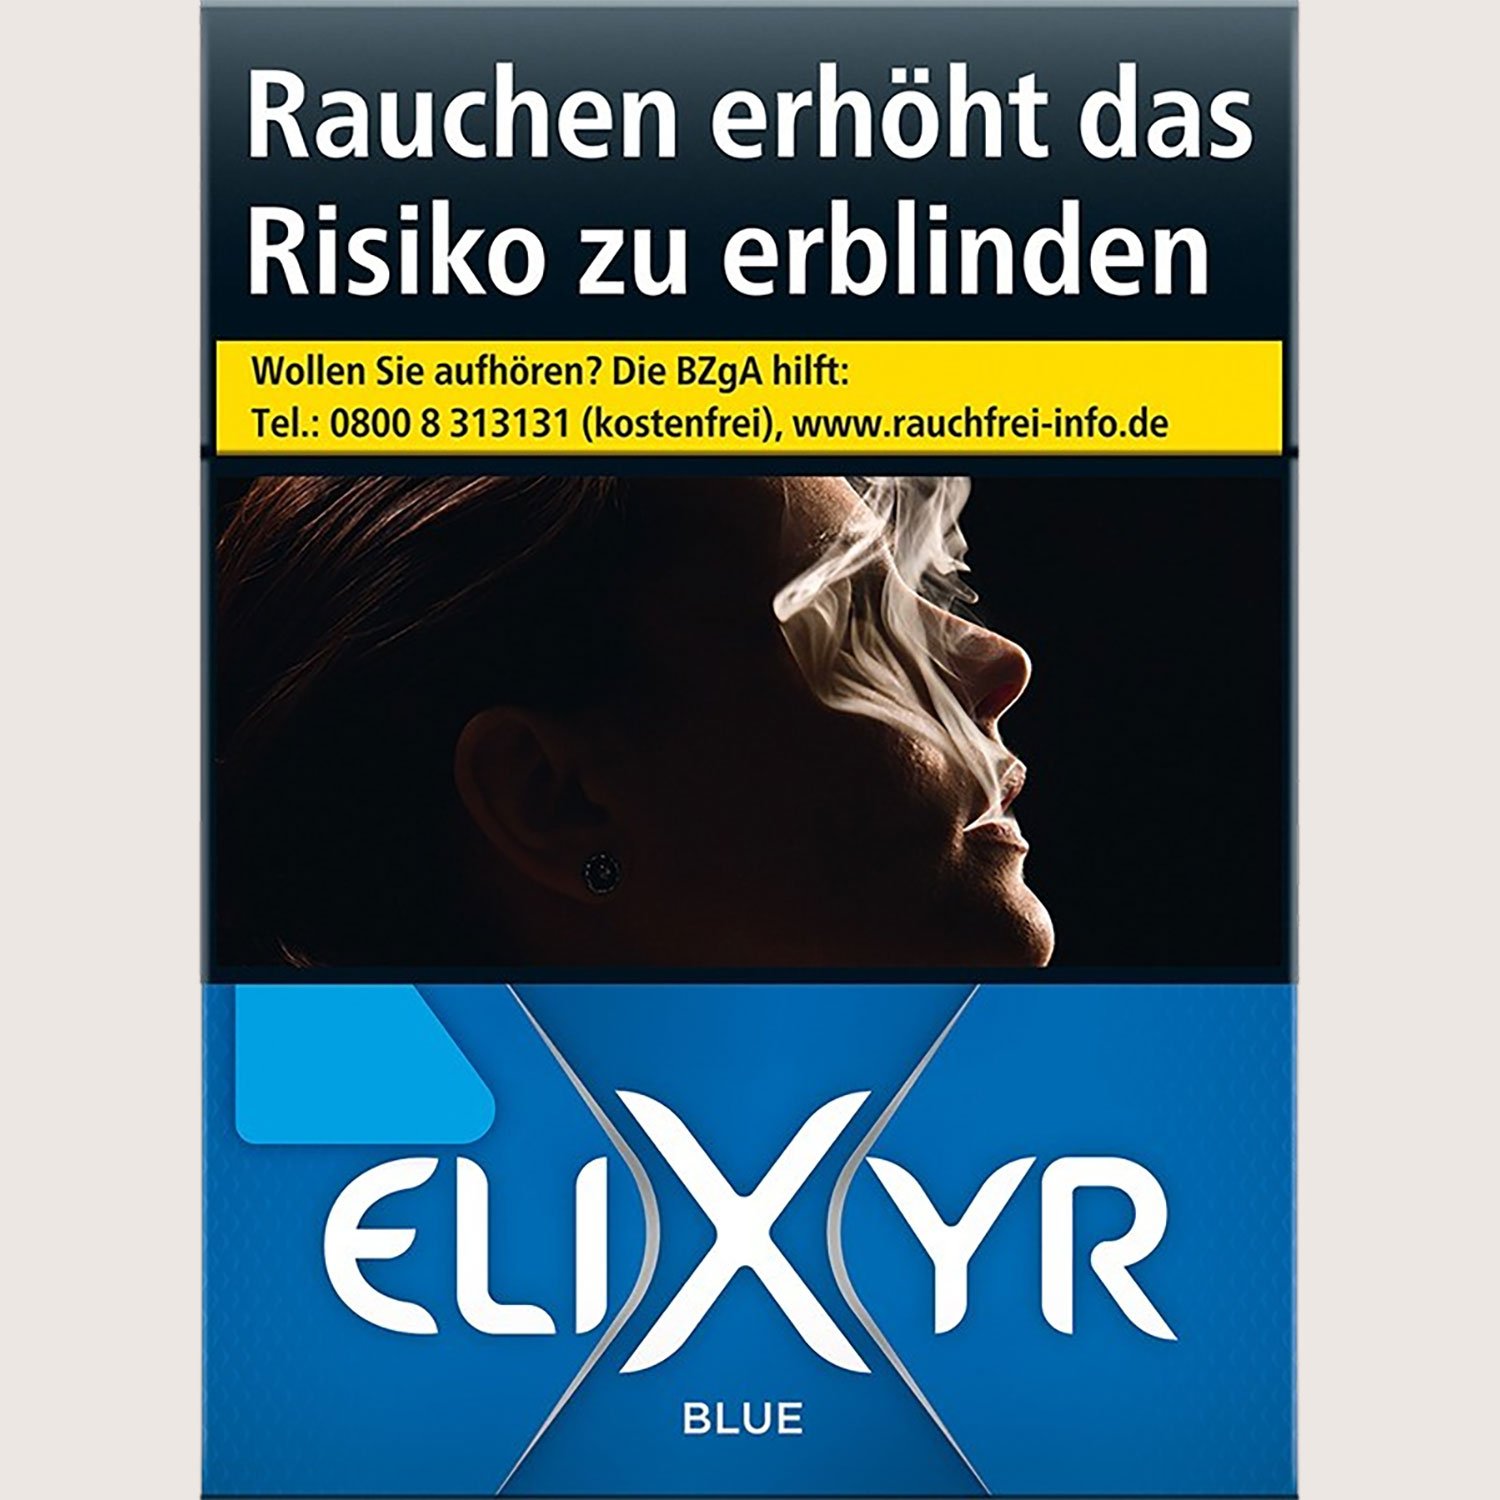 Elixyr Blue 9,00 €